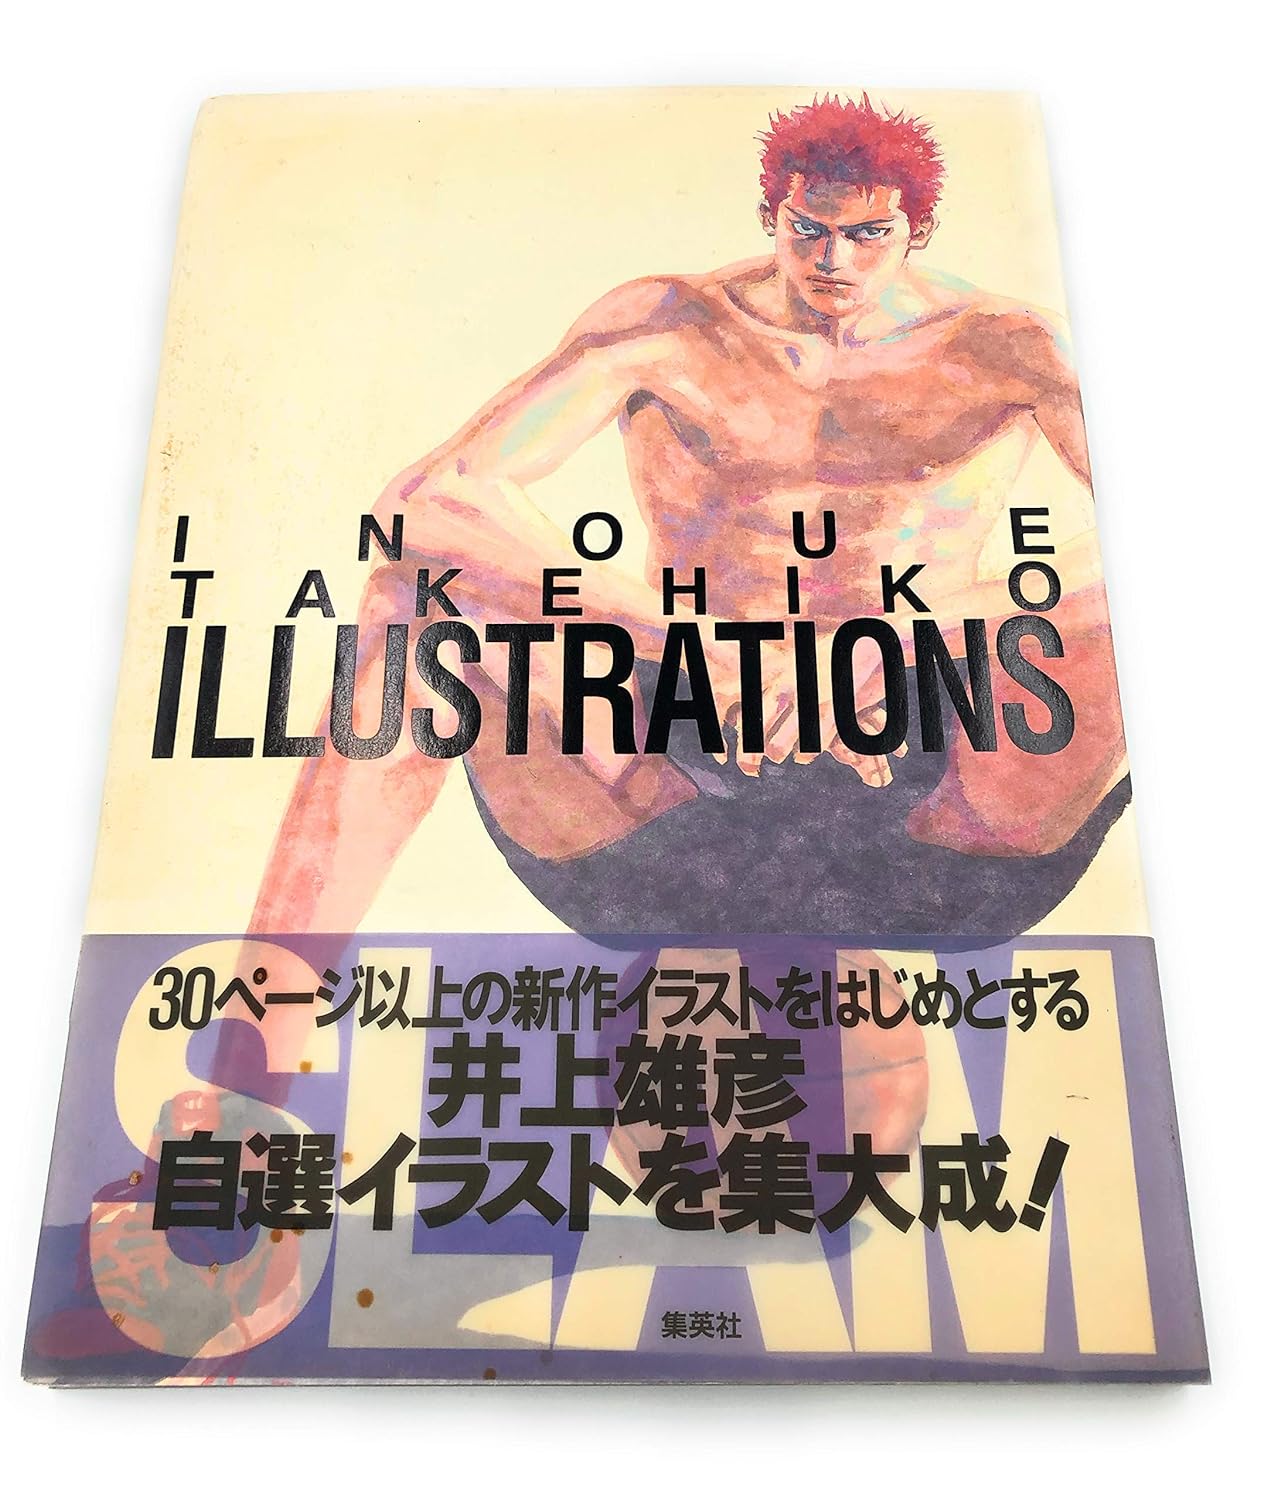 Artbook Slam Dunk Inoue Takehiko Illustrations